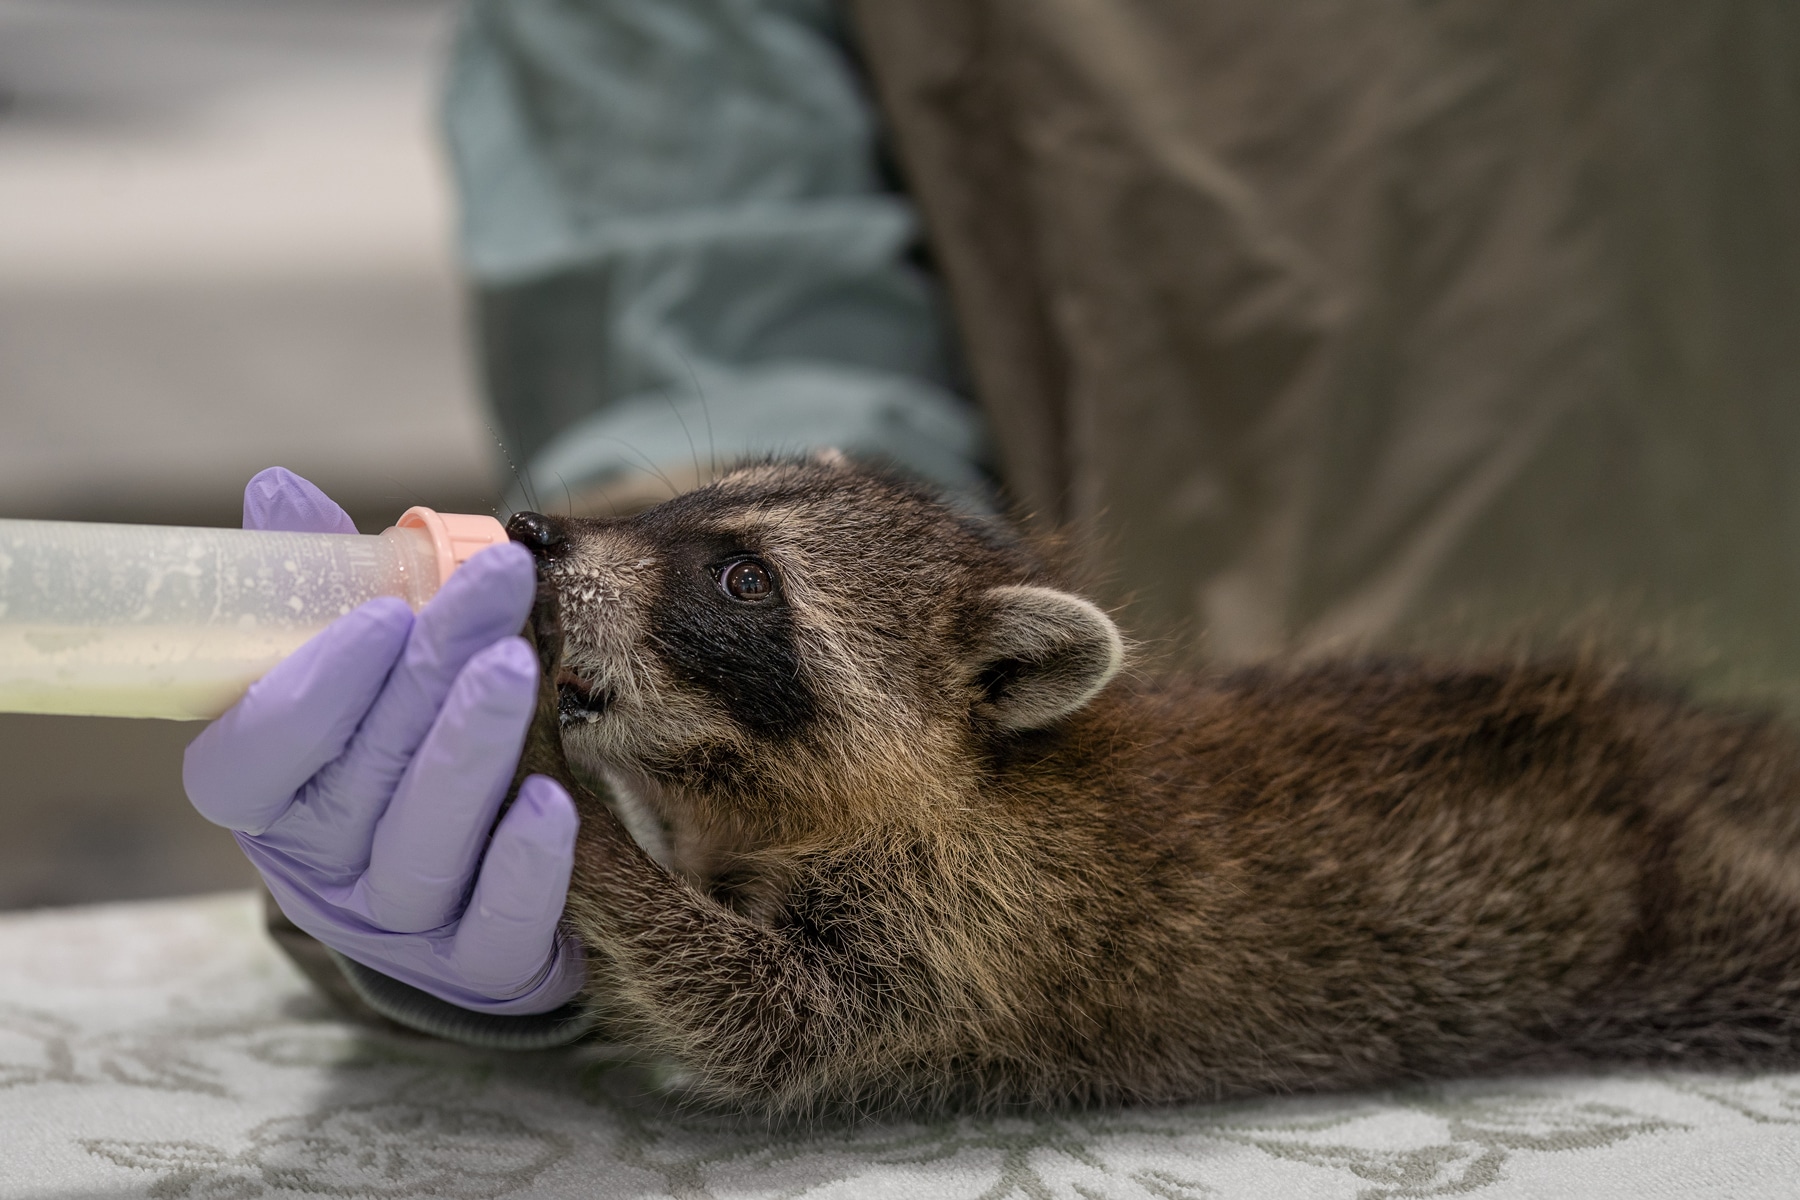 Baby raccoon nursing from handheld bottle